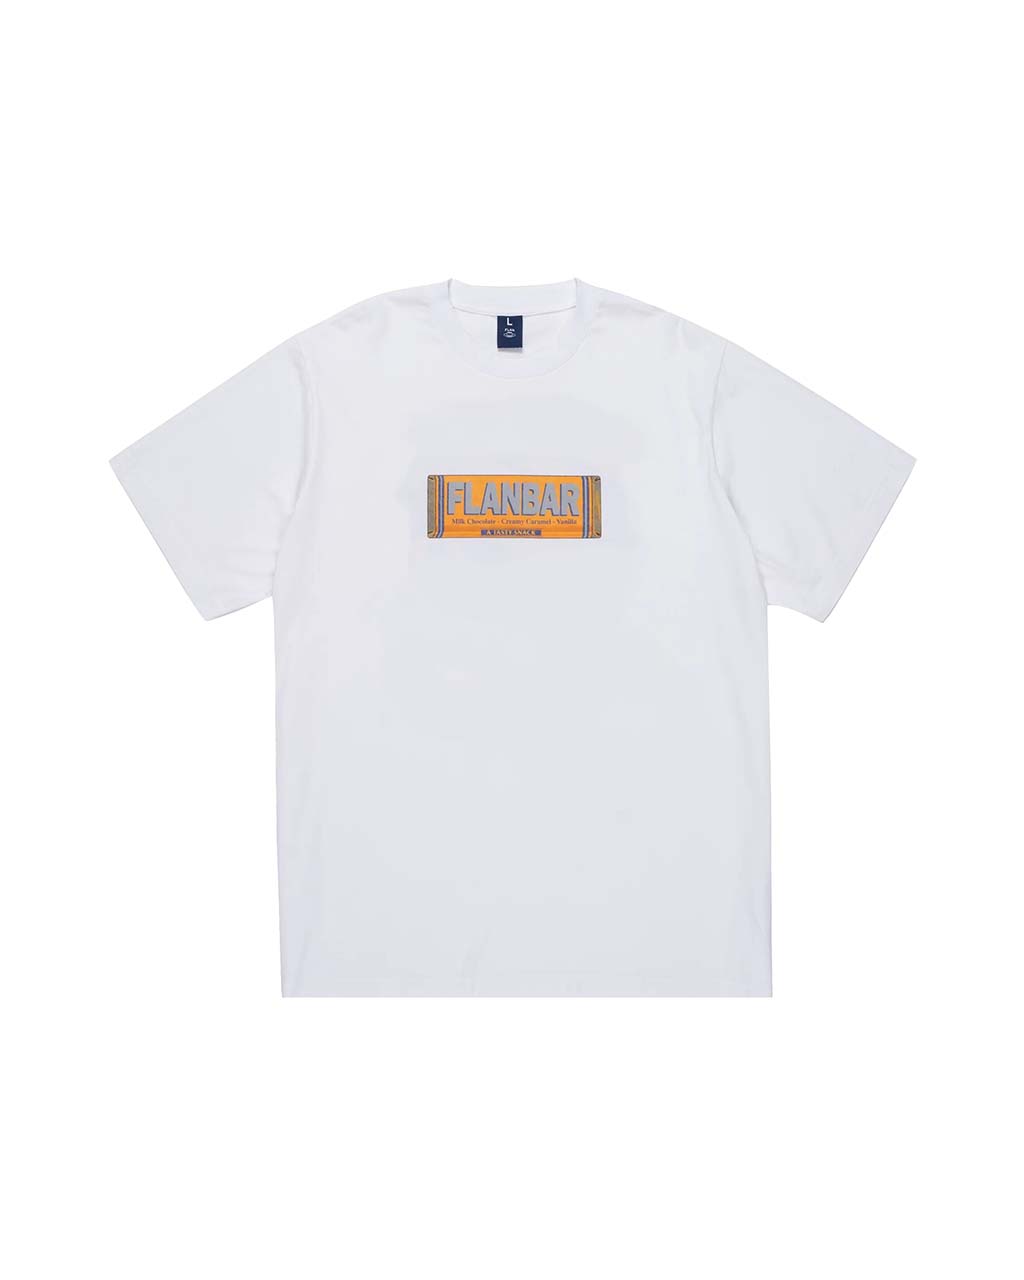 Flan Labs Flanbar T-Shirt